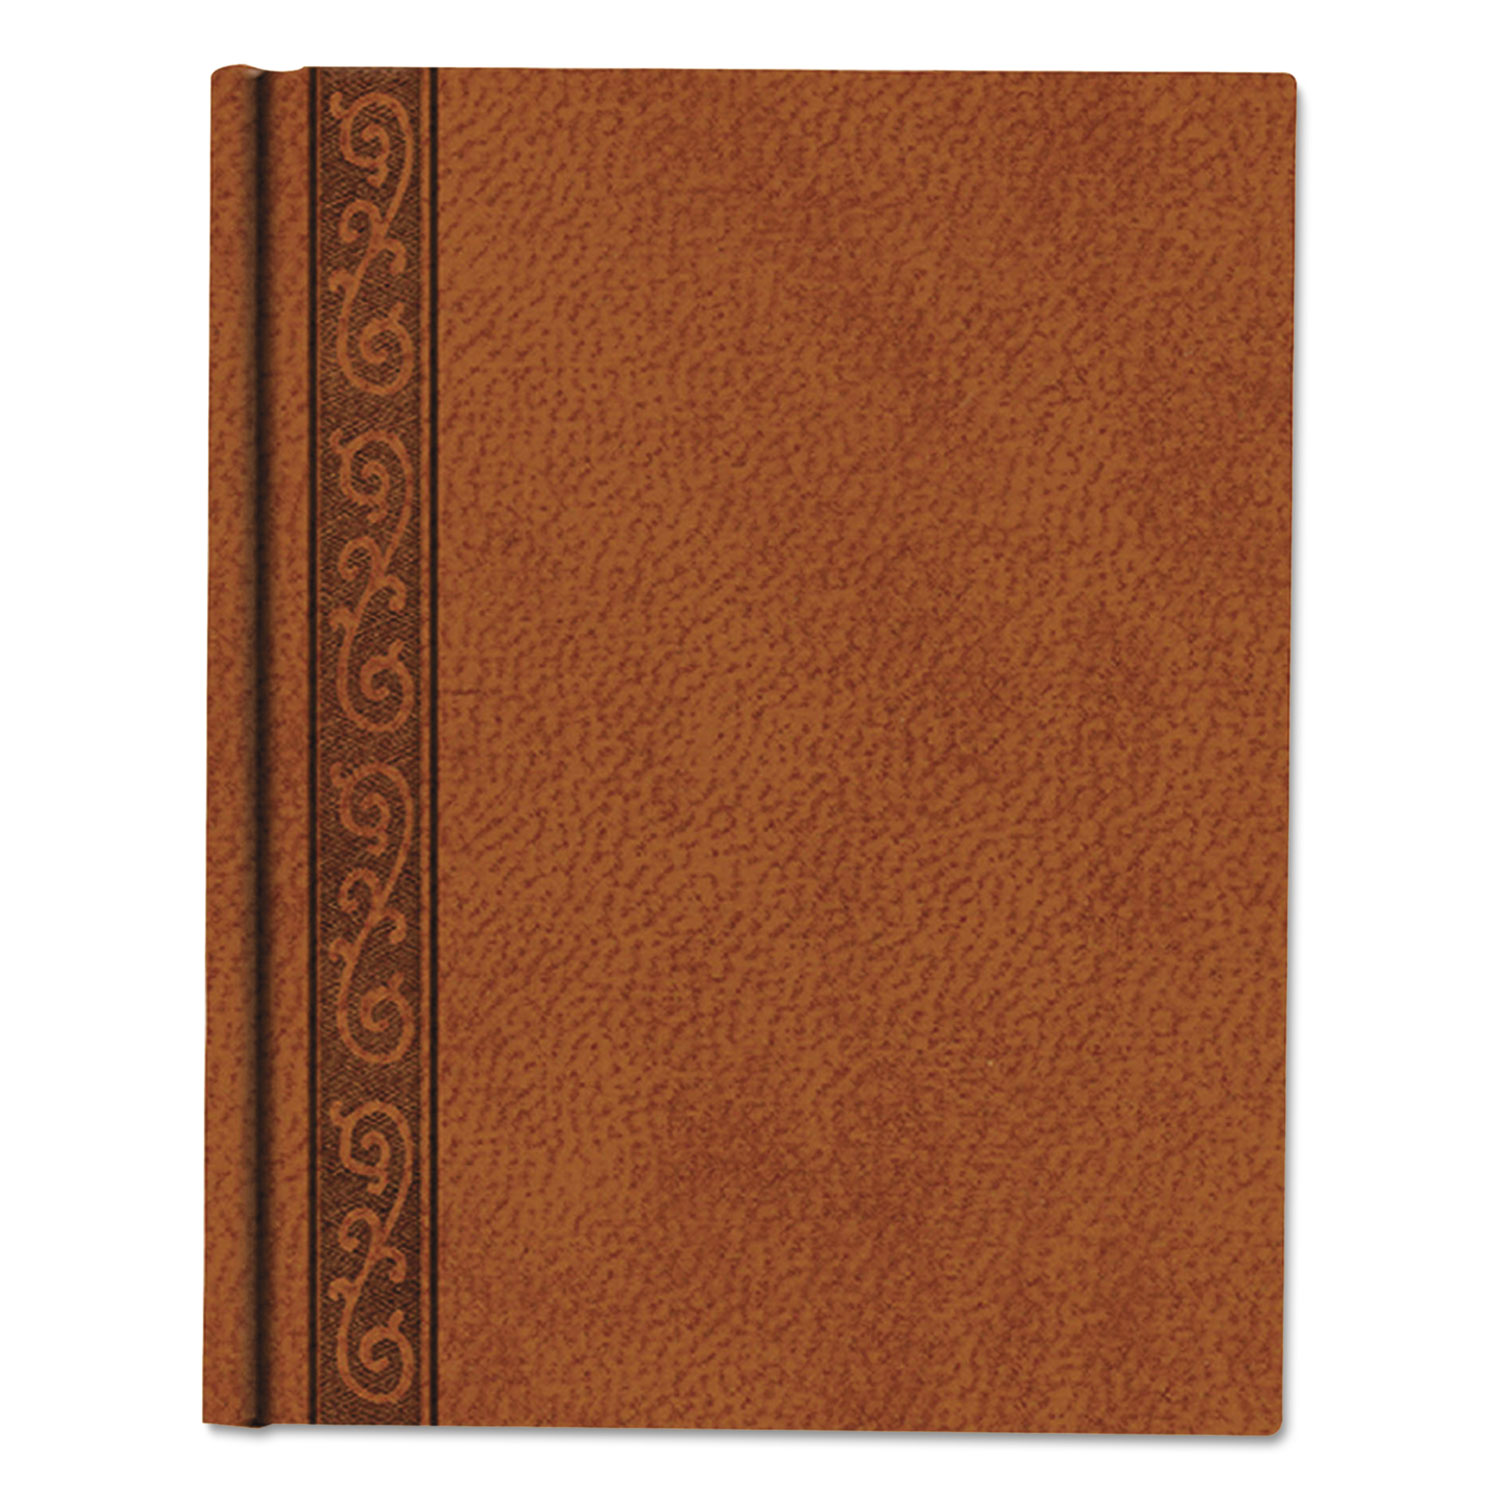  Blueline A8004 Da Vinci Notebook, 1 Subject, Medium/College Rule, Tan Cover, 11 x 8.5, 75 Sheets (REDA8004) 